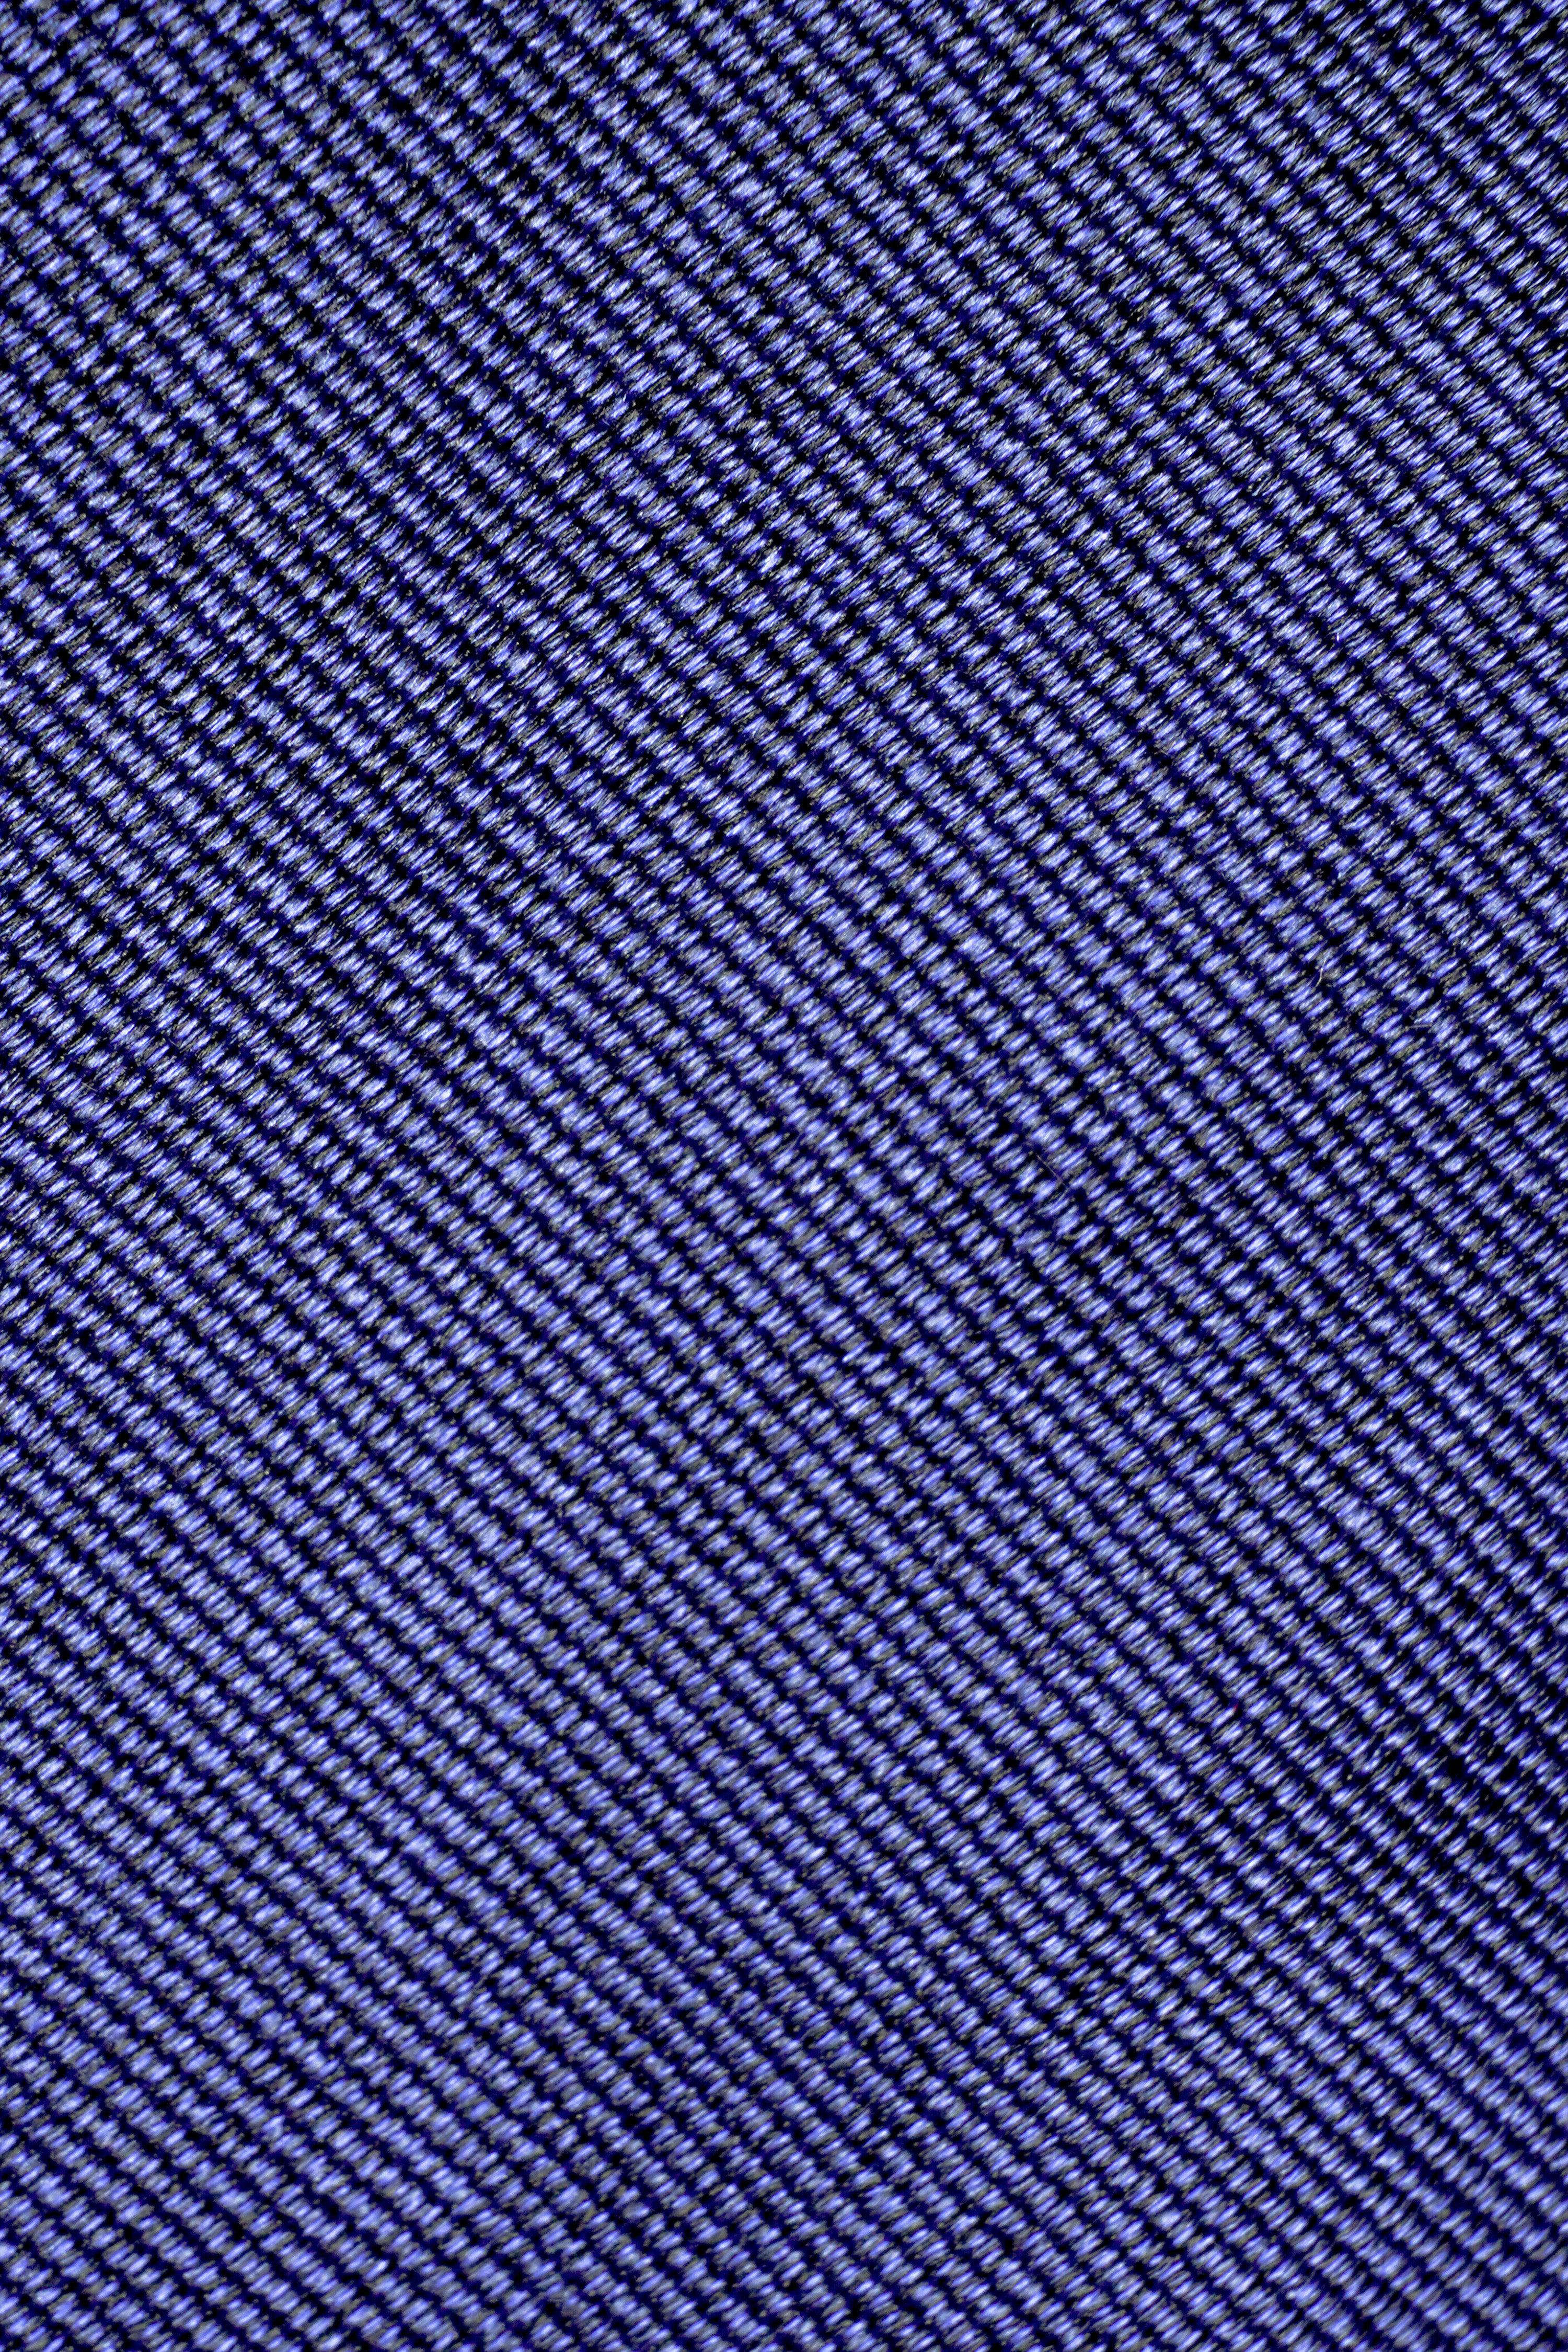 Alt view 1 Bowman Solid Woven Tie in Denim Blue